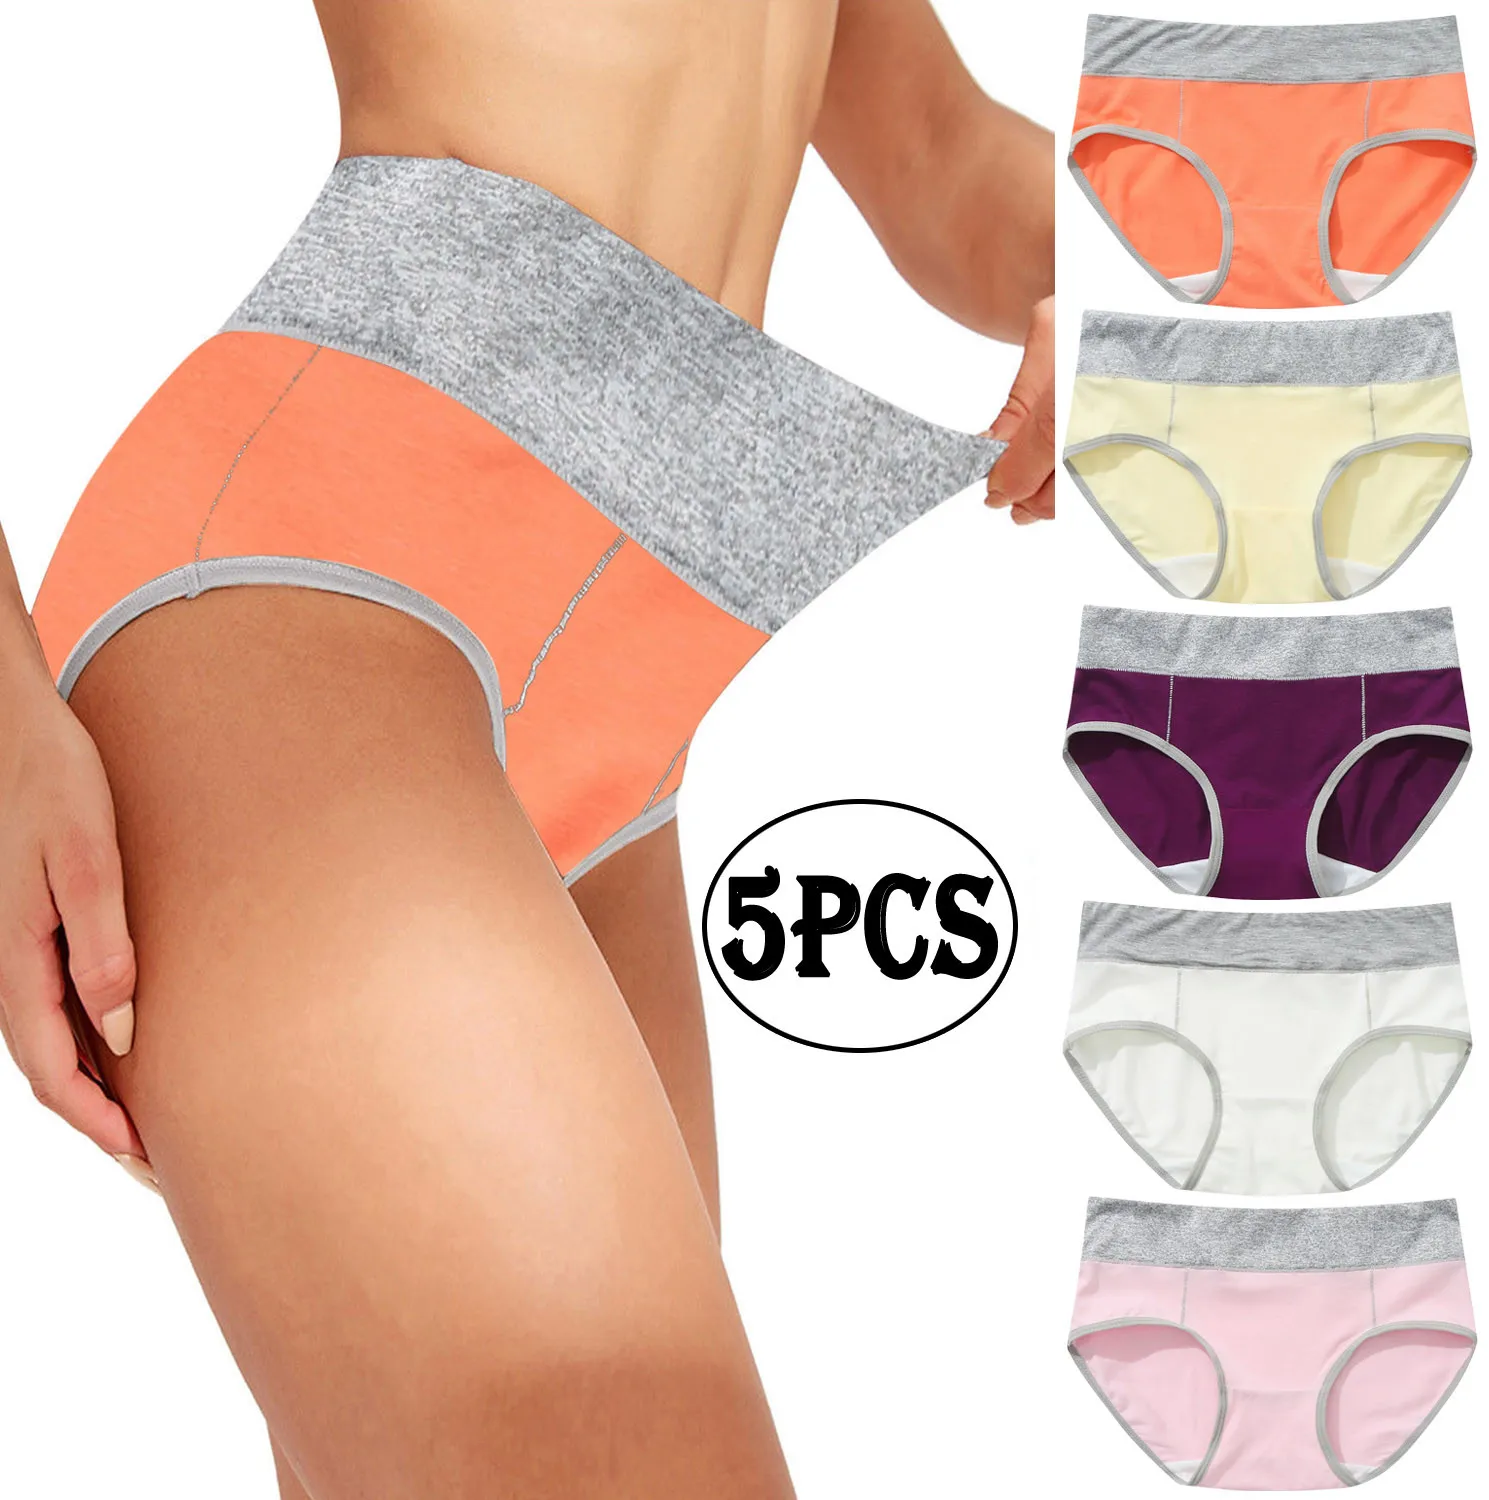 

5pcs Women Patchwork Cotton Briefs Panties Seamless Female Lingerie Daily Underwear bragas para mujeres culottes pour femmes